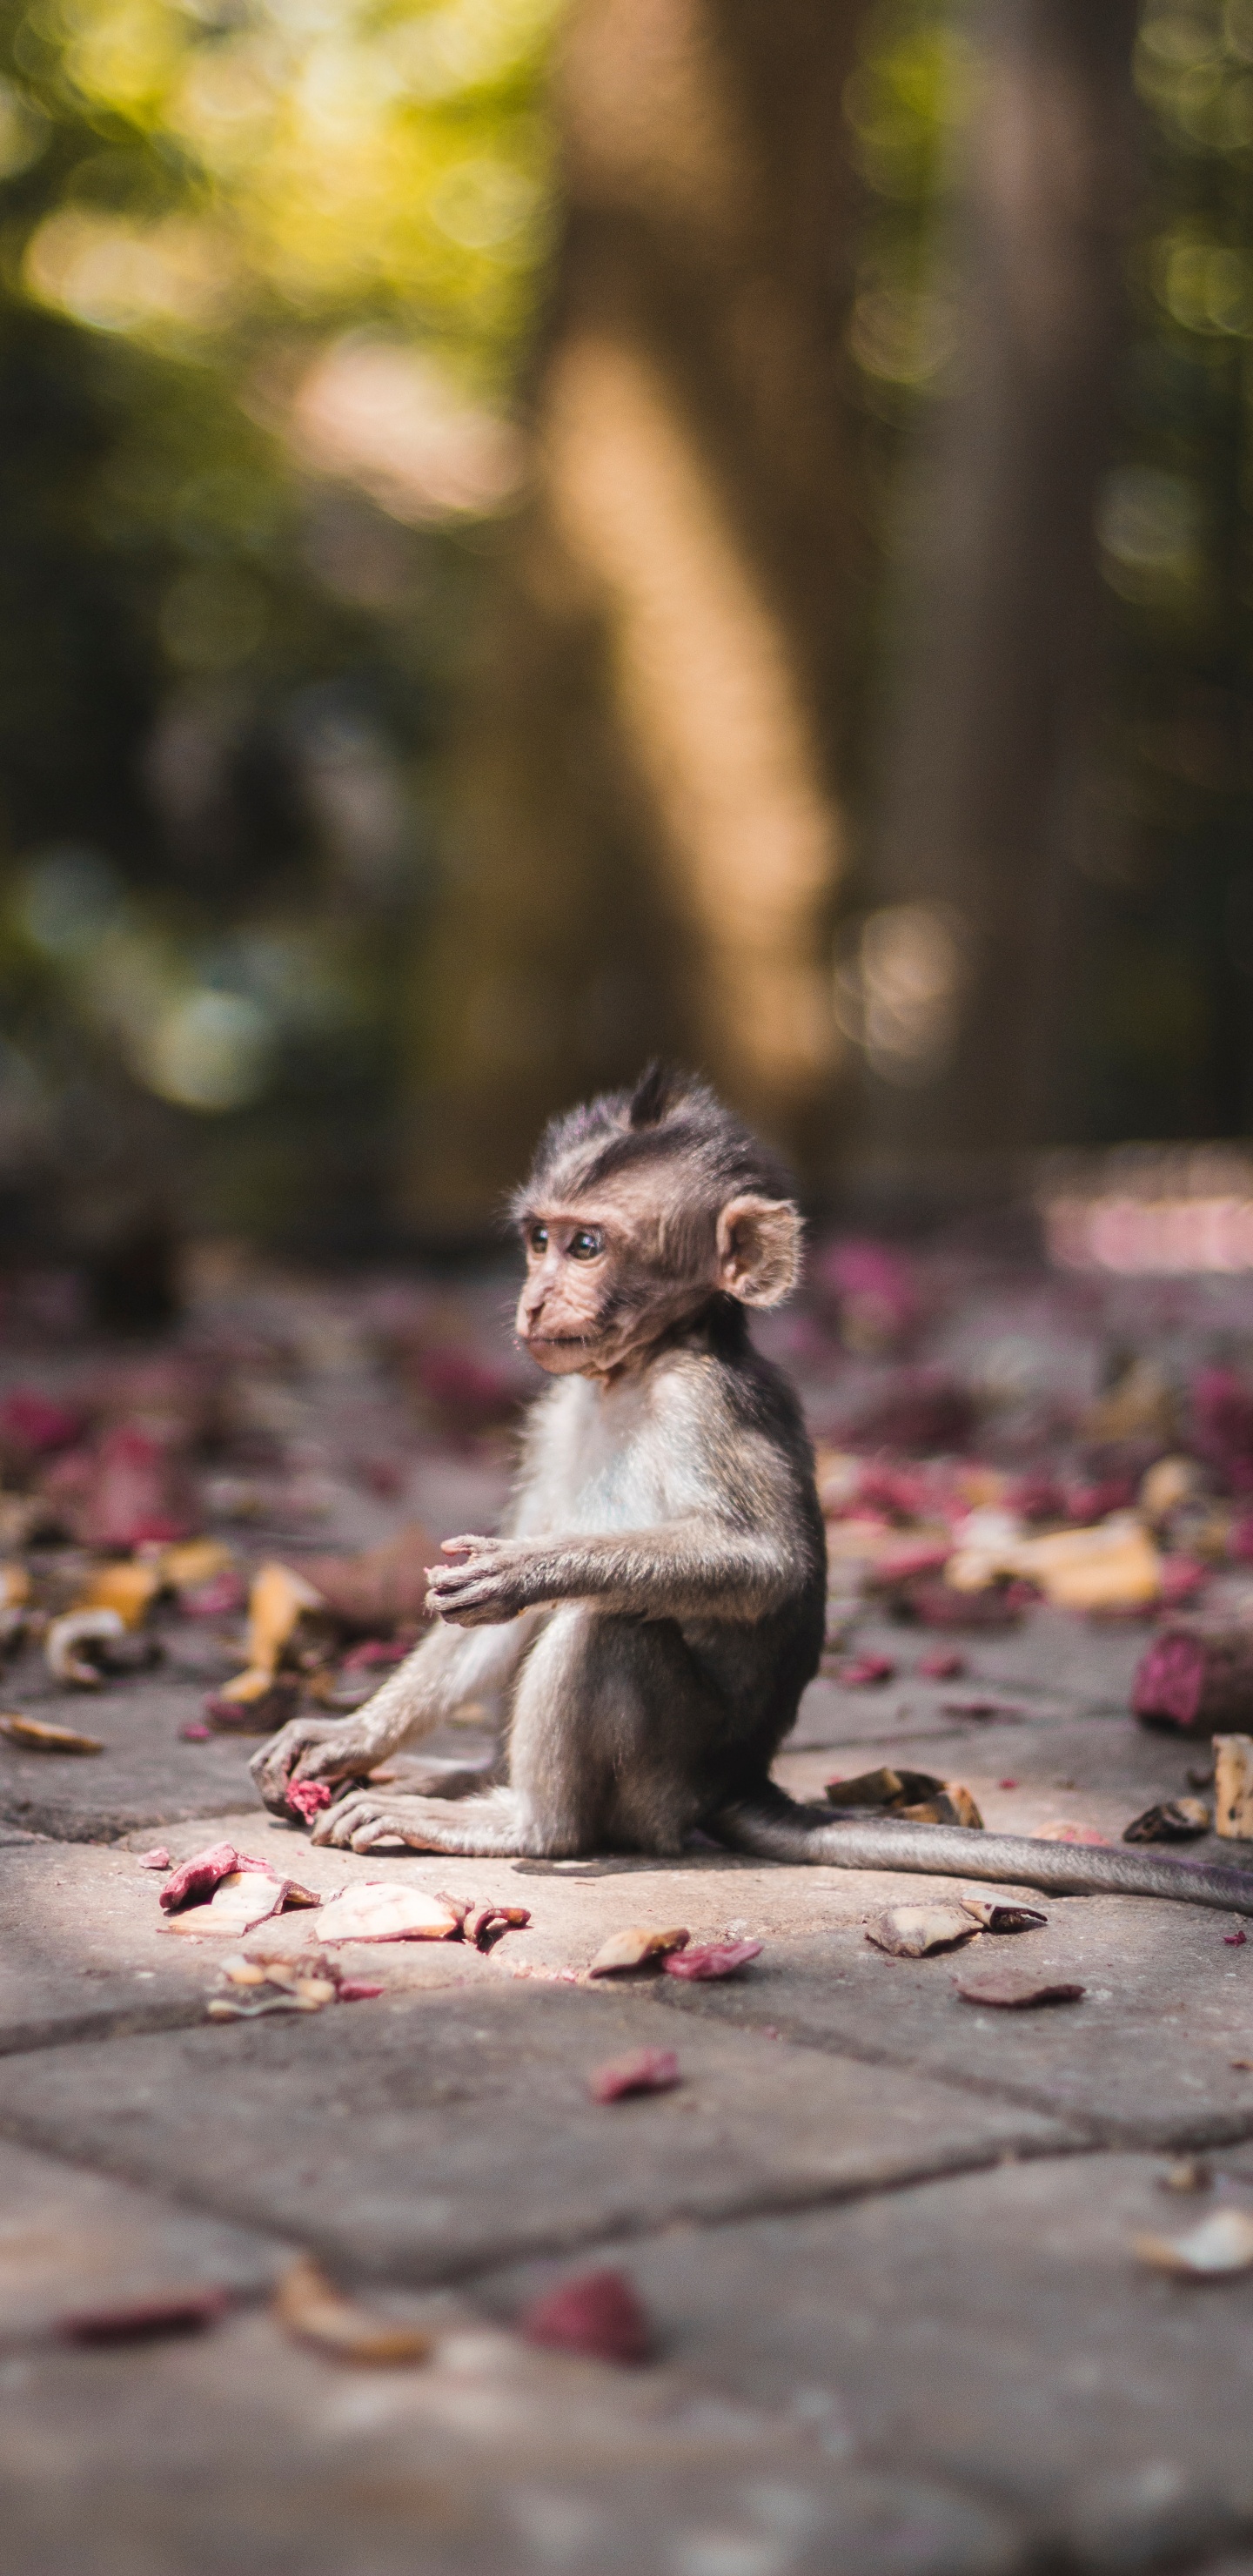 Brown Monkey Sitting on Brown Concrete Floor During Daytime. Wallpaper in 1440x2960 Resolution